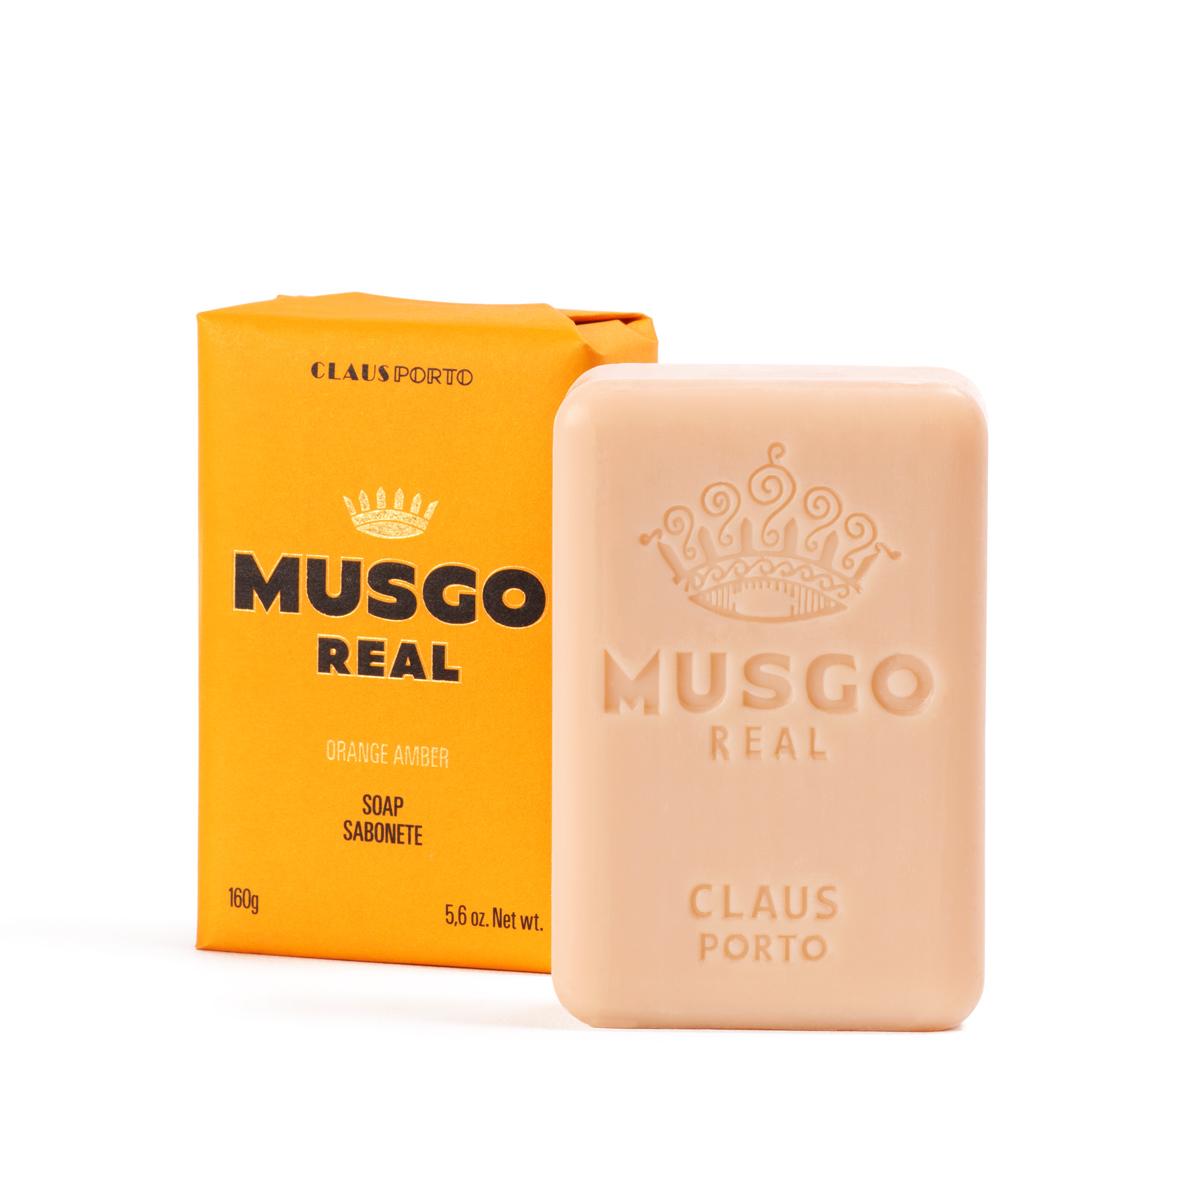 Musgo Real Men's Body Soap Orange Amber 160g